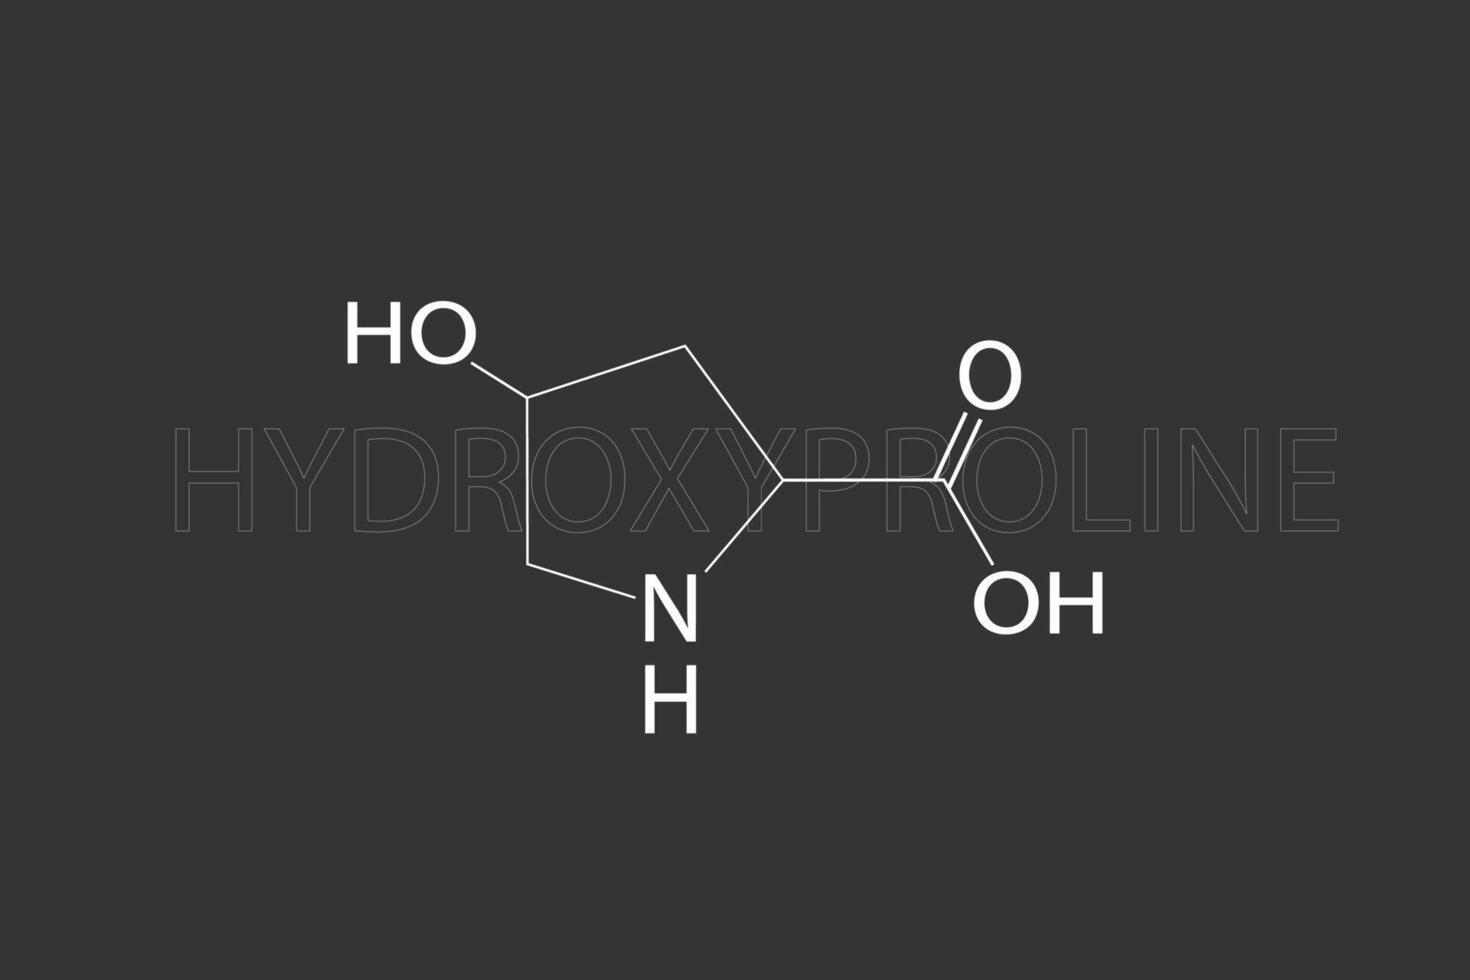 Hydryxoprolin molekular Skelett- chemisch Formel vektor